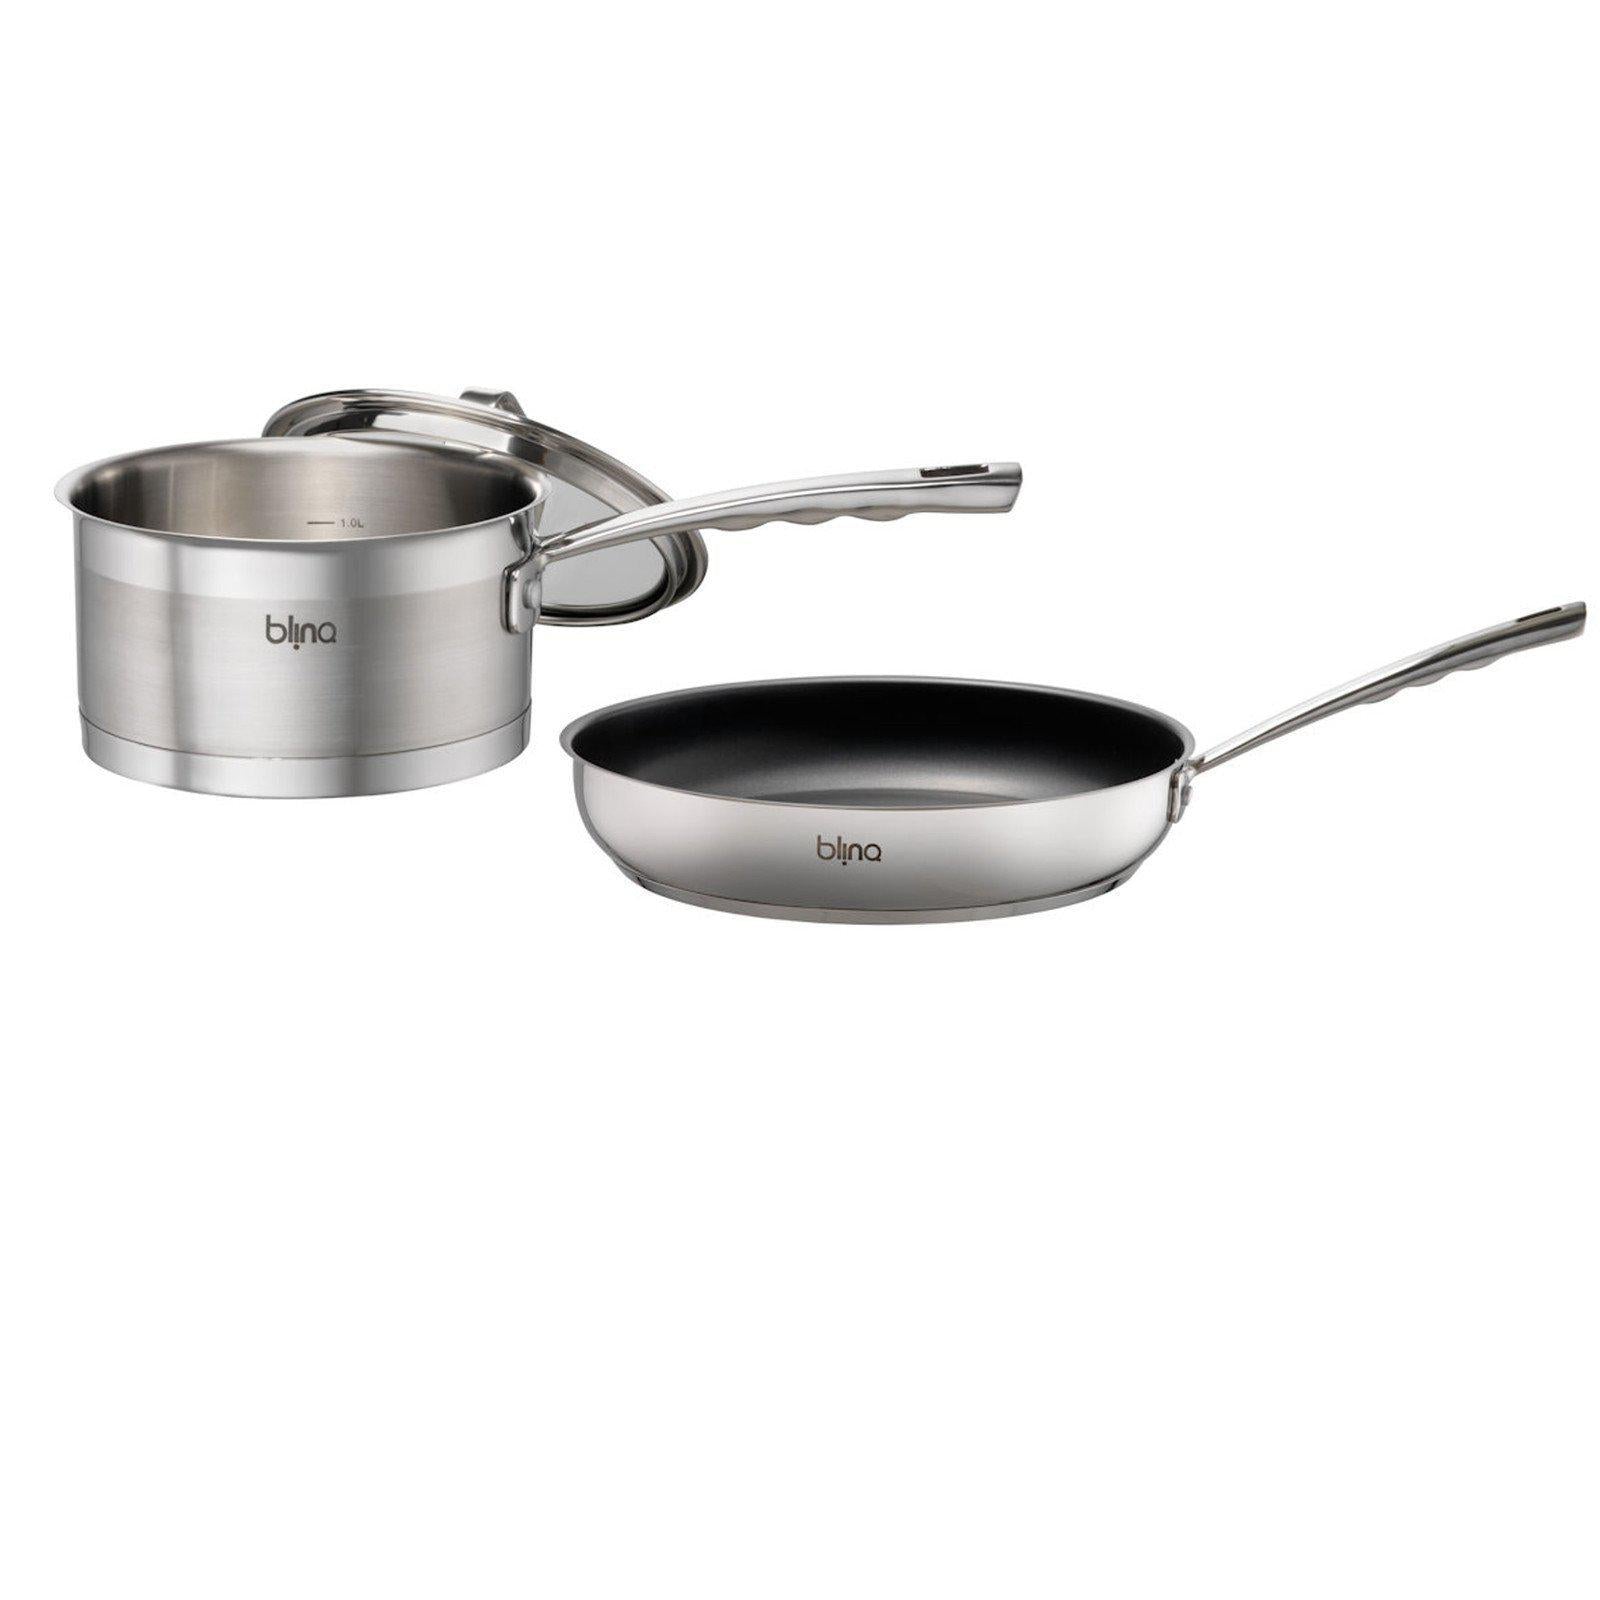 Blinq 2pcs Saucepan & Frypan Induction Cookware Set - Stainless Steel-Stainless Steel Cookware Set-Chef's Quality Cookware